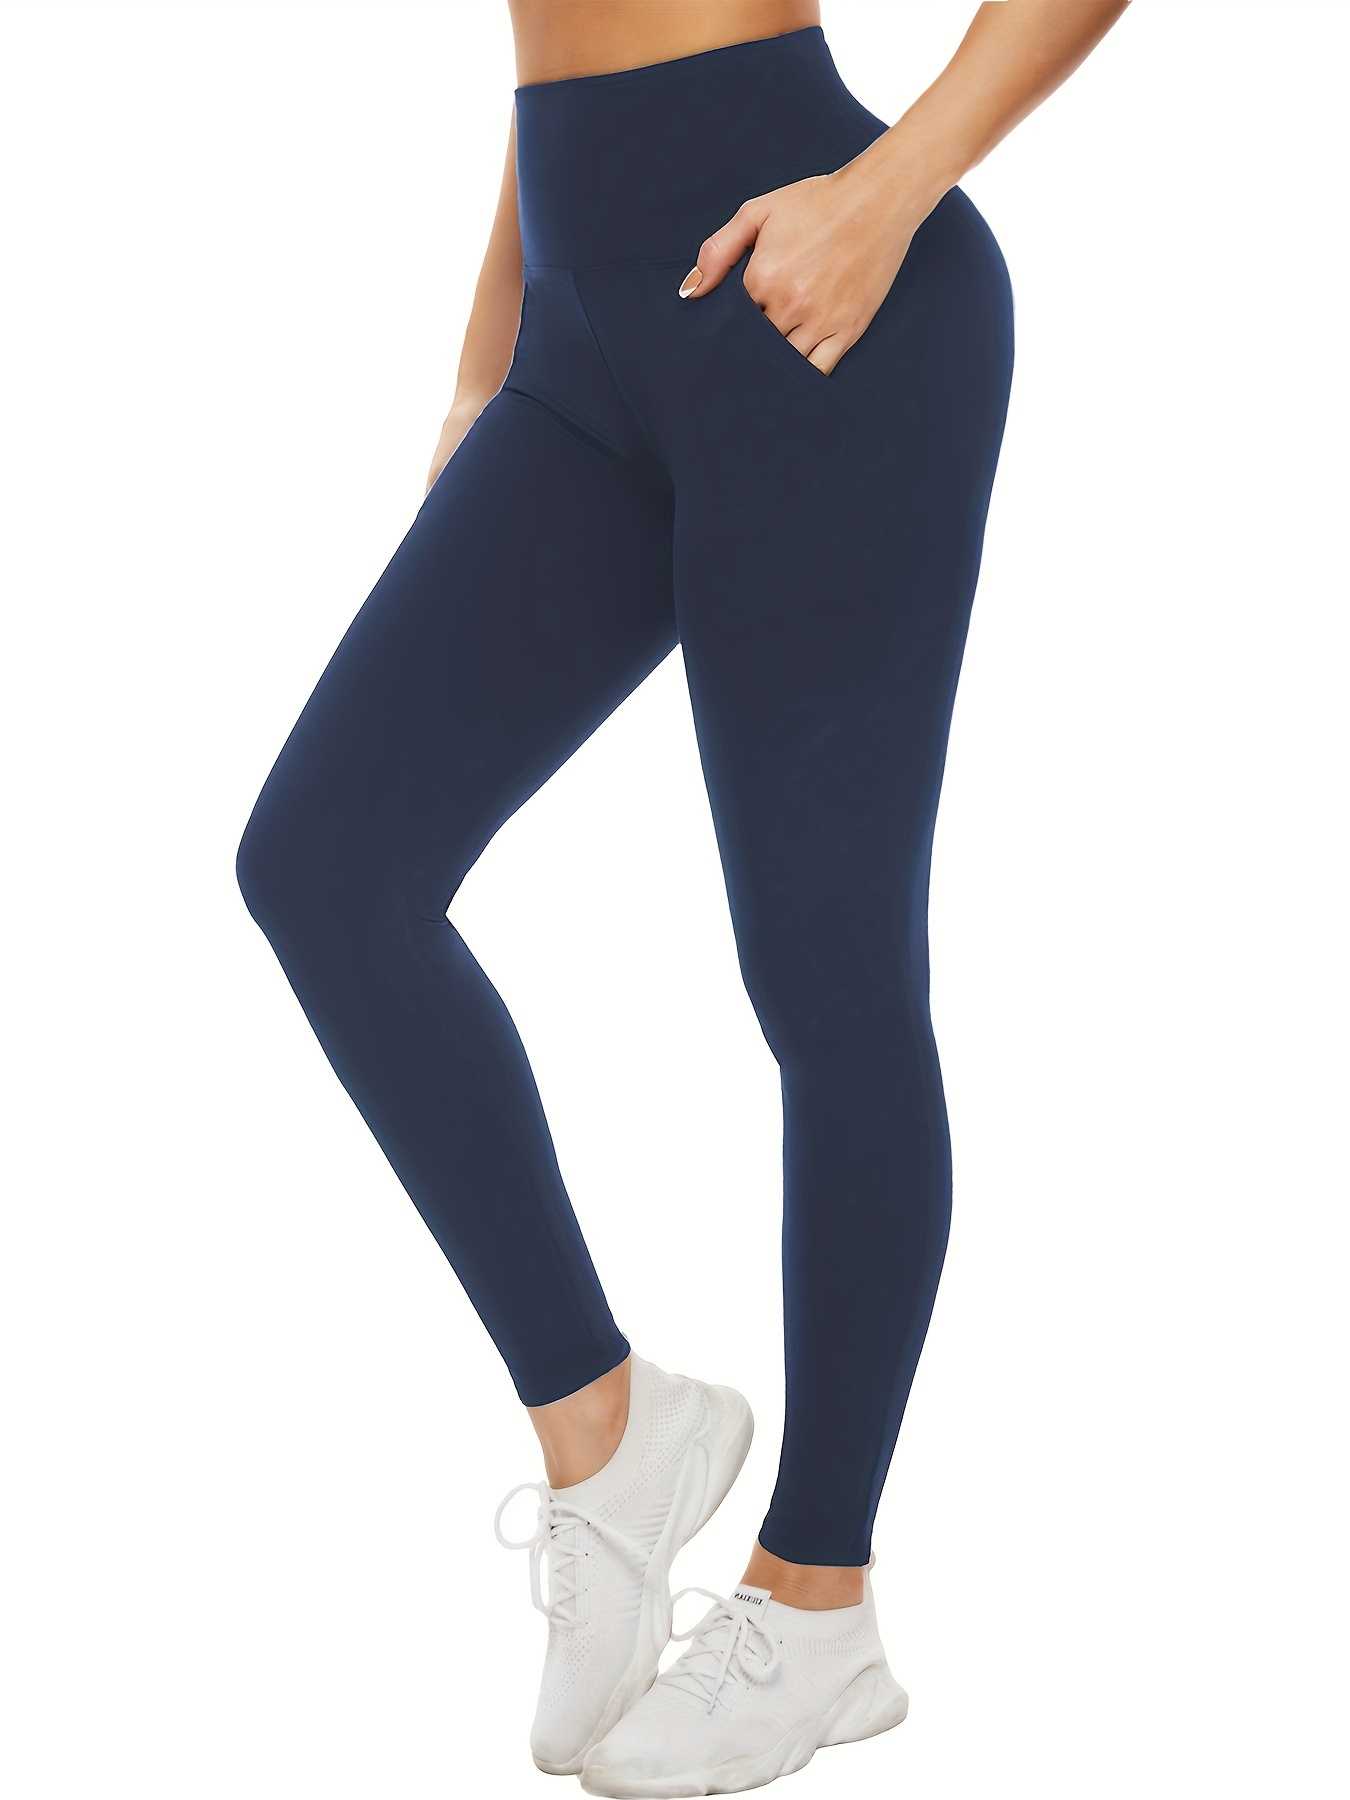 IKEEP 2-Pack Women's Yoga Pants for Women, High Waist Tummy